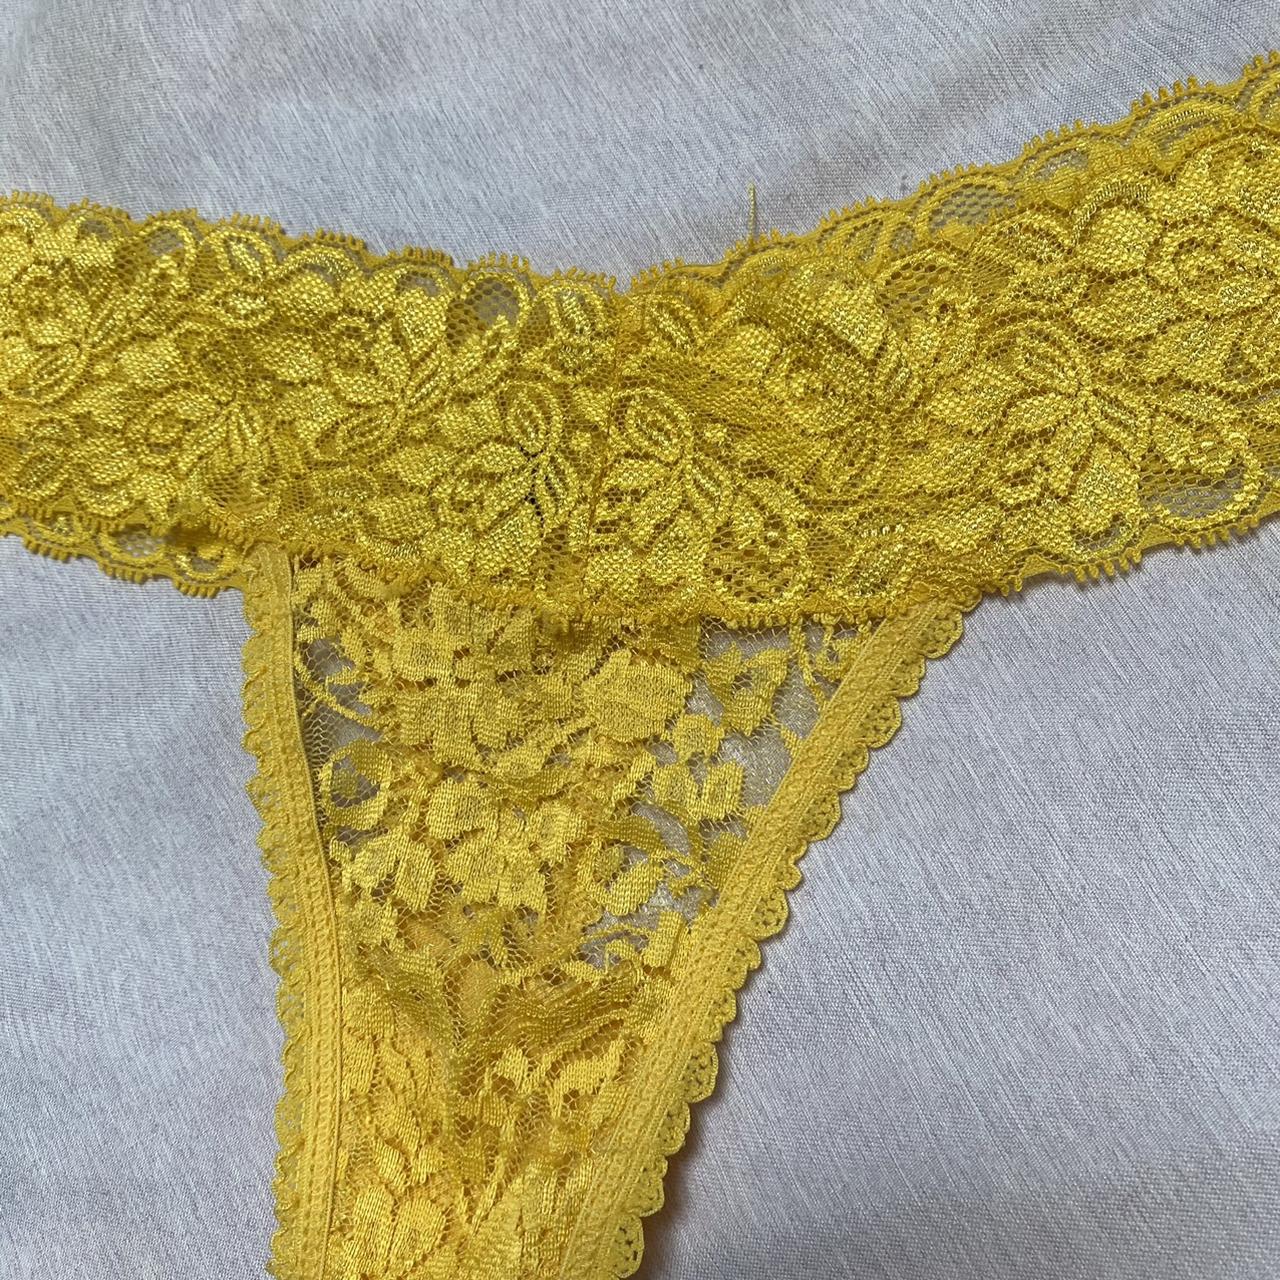 Vibrant Yellow Lace Thong With Orange Trim CD/TS Panties -  Israel